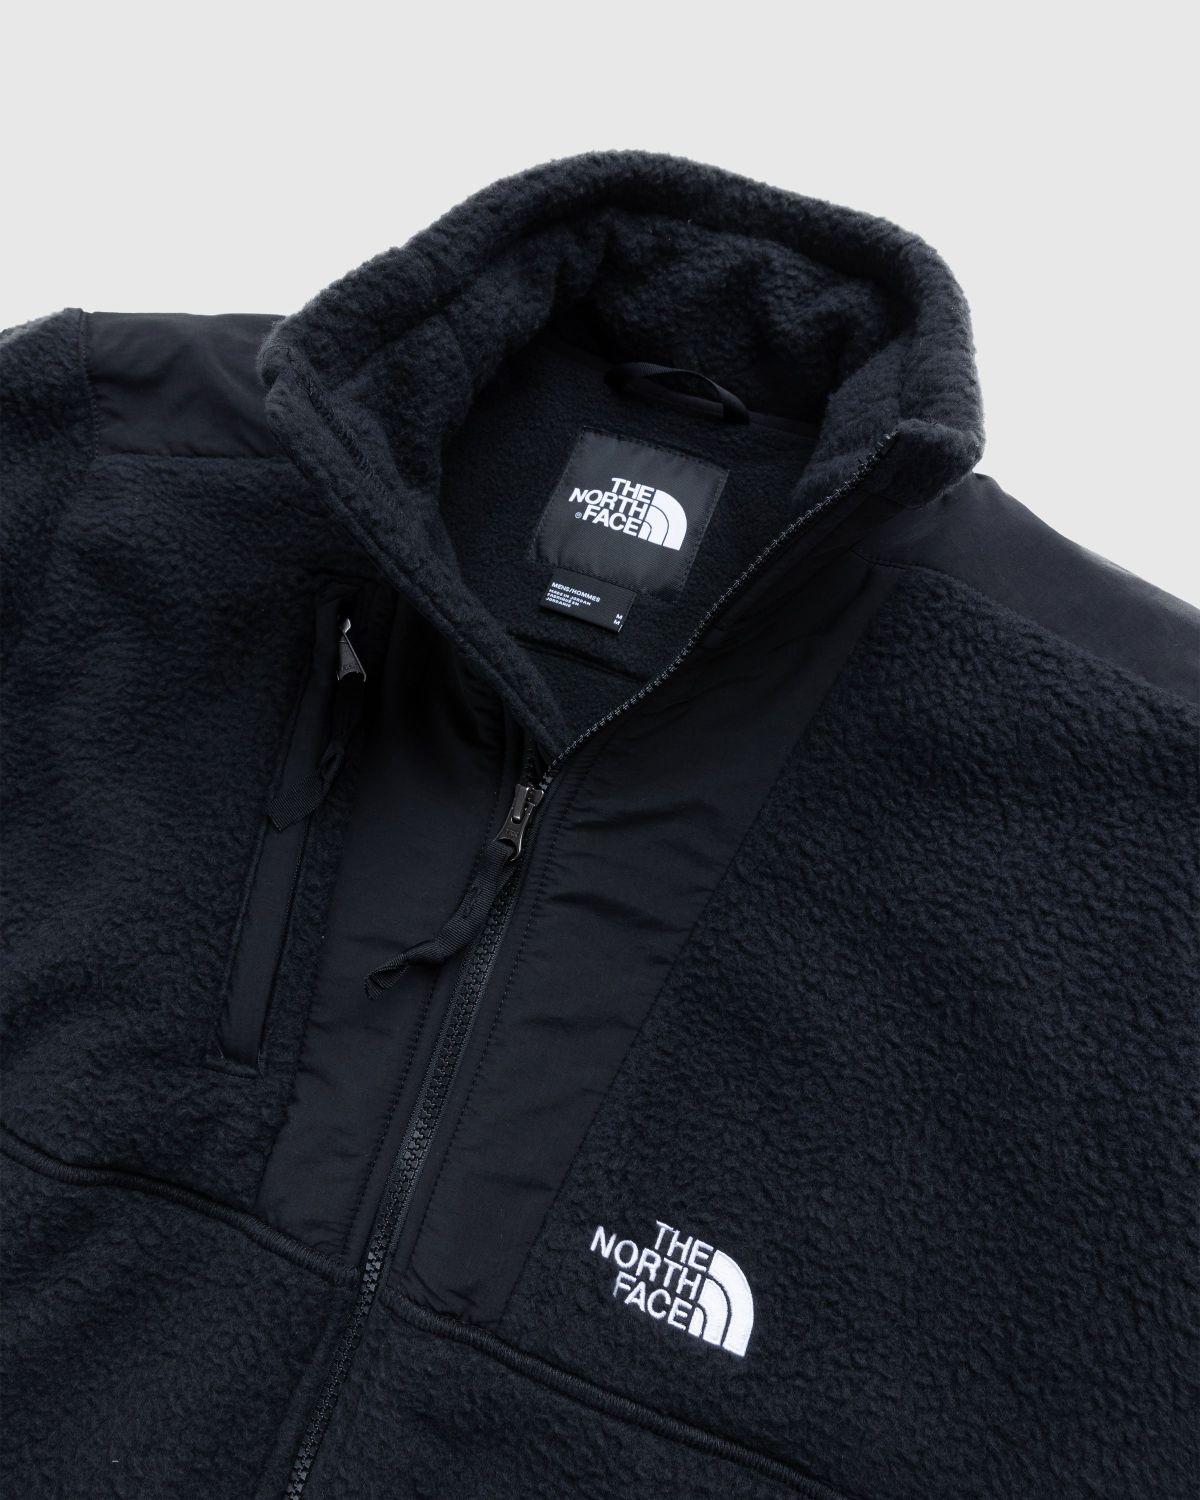 The North Face – '94 High Pile Denali Jacket Black - Fleece - Black - Image 3